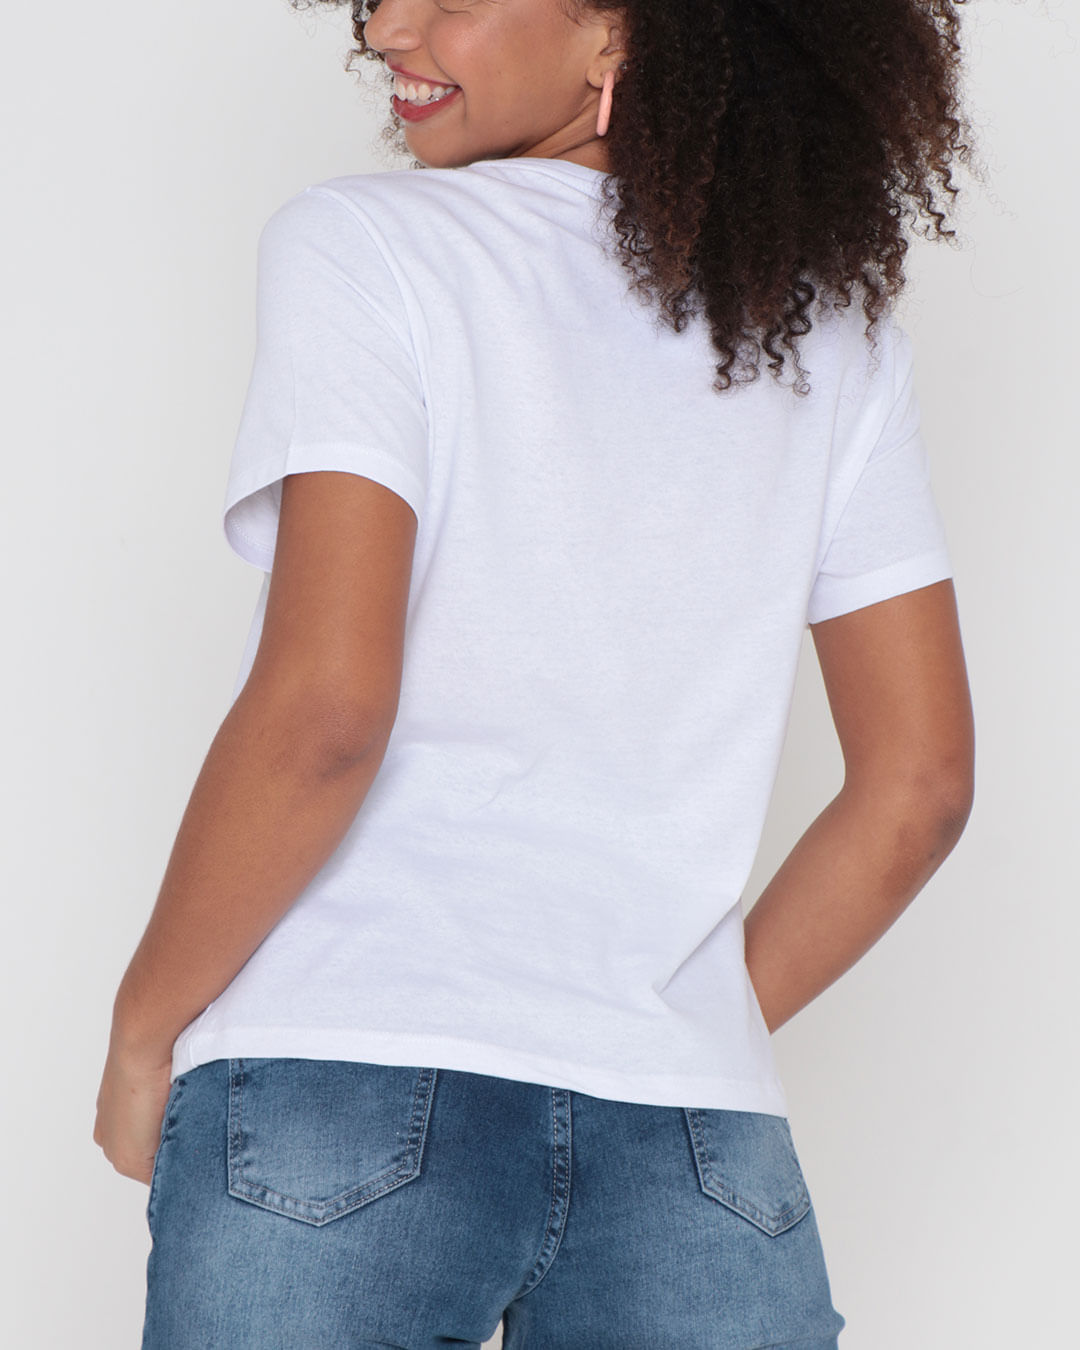 Camiseta-Feminina-Estampa-Frase-Branca